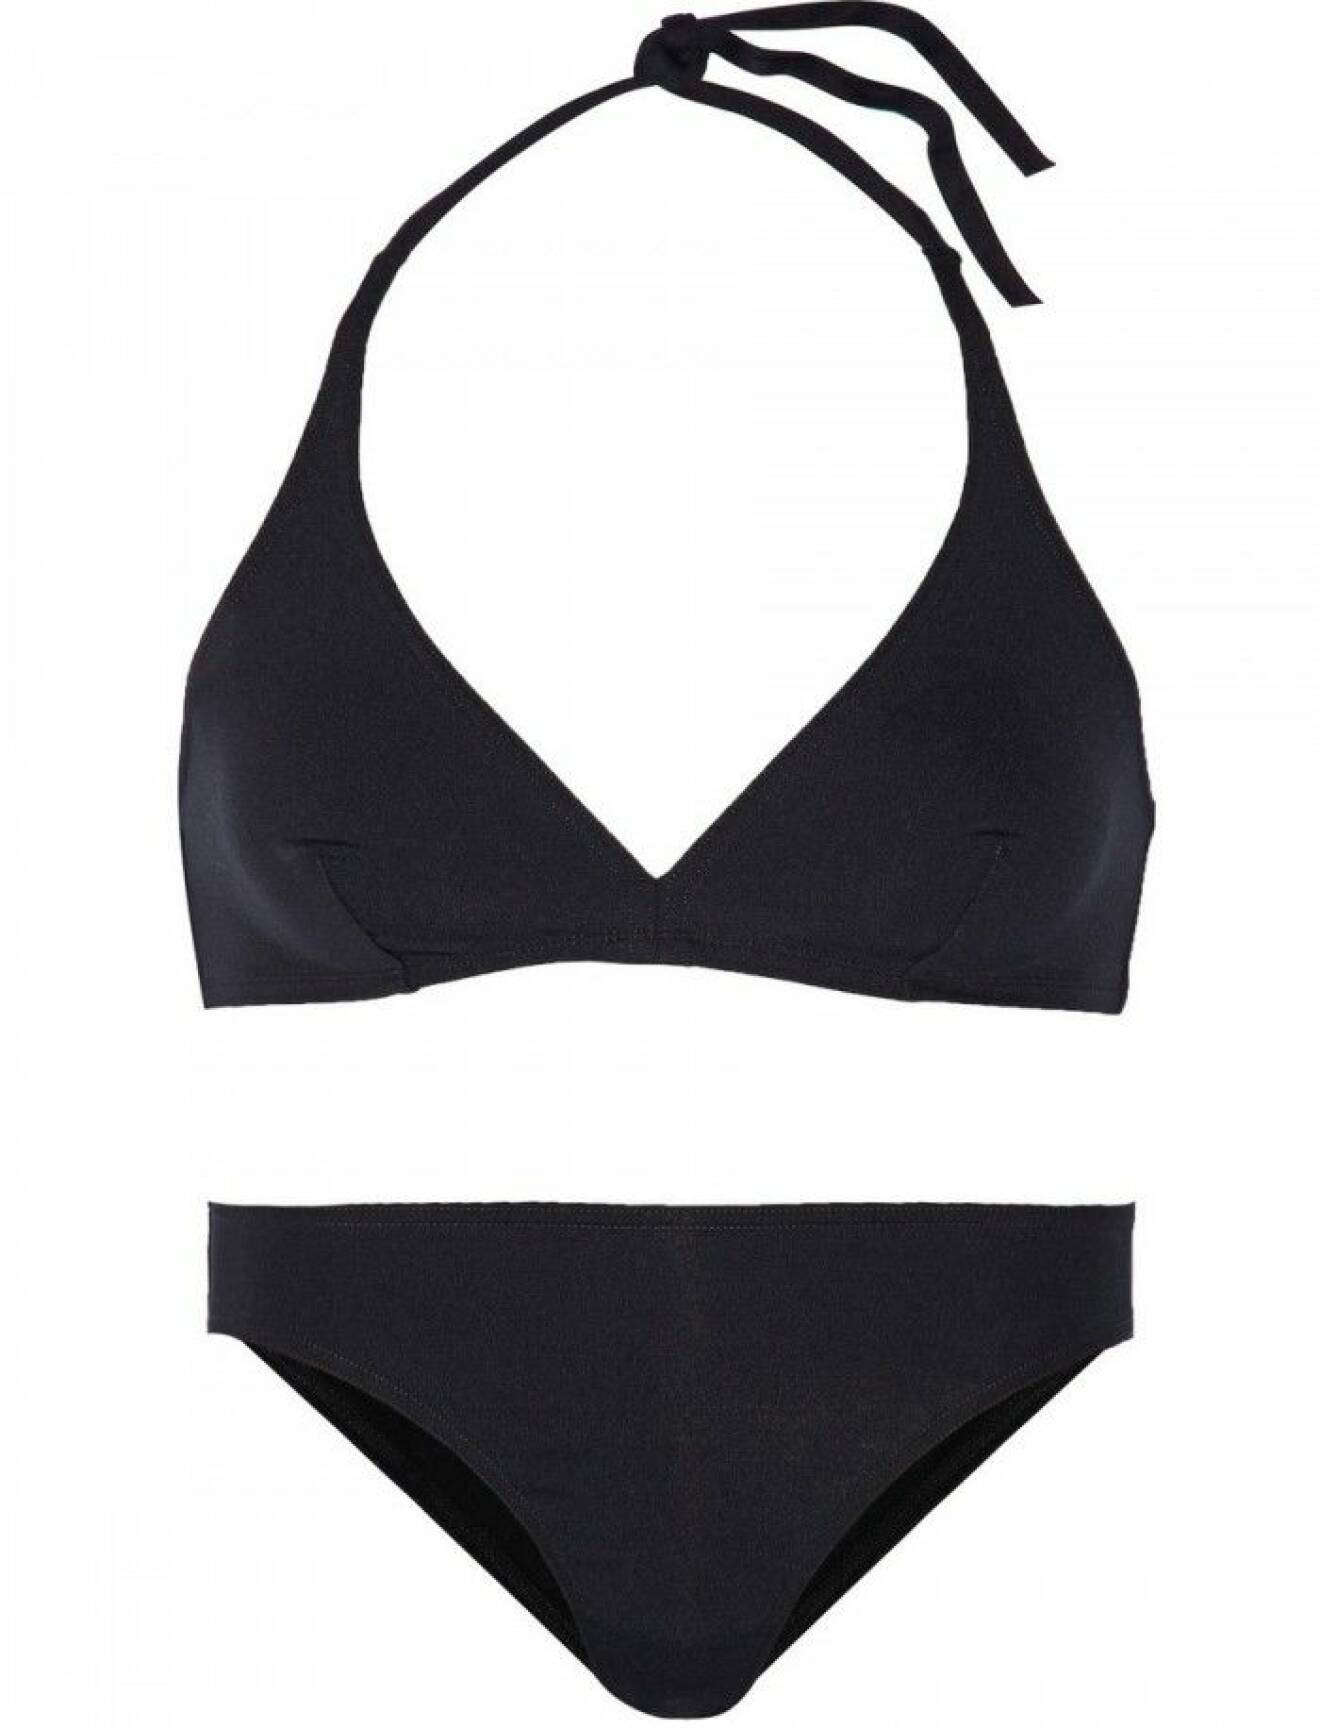 7. Bikini, 2293 kr, Eres Net-a-porter.com